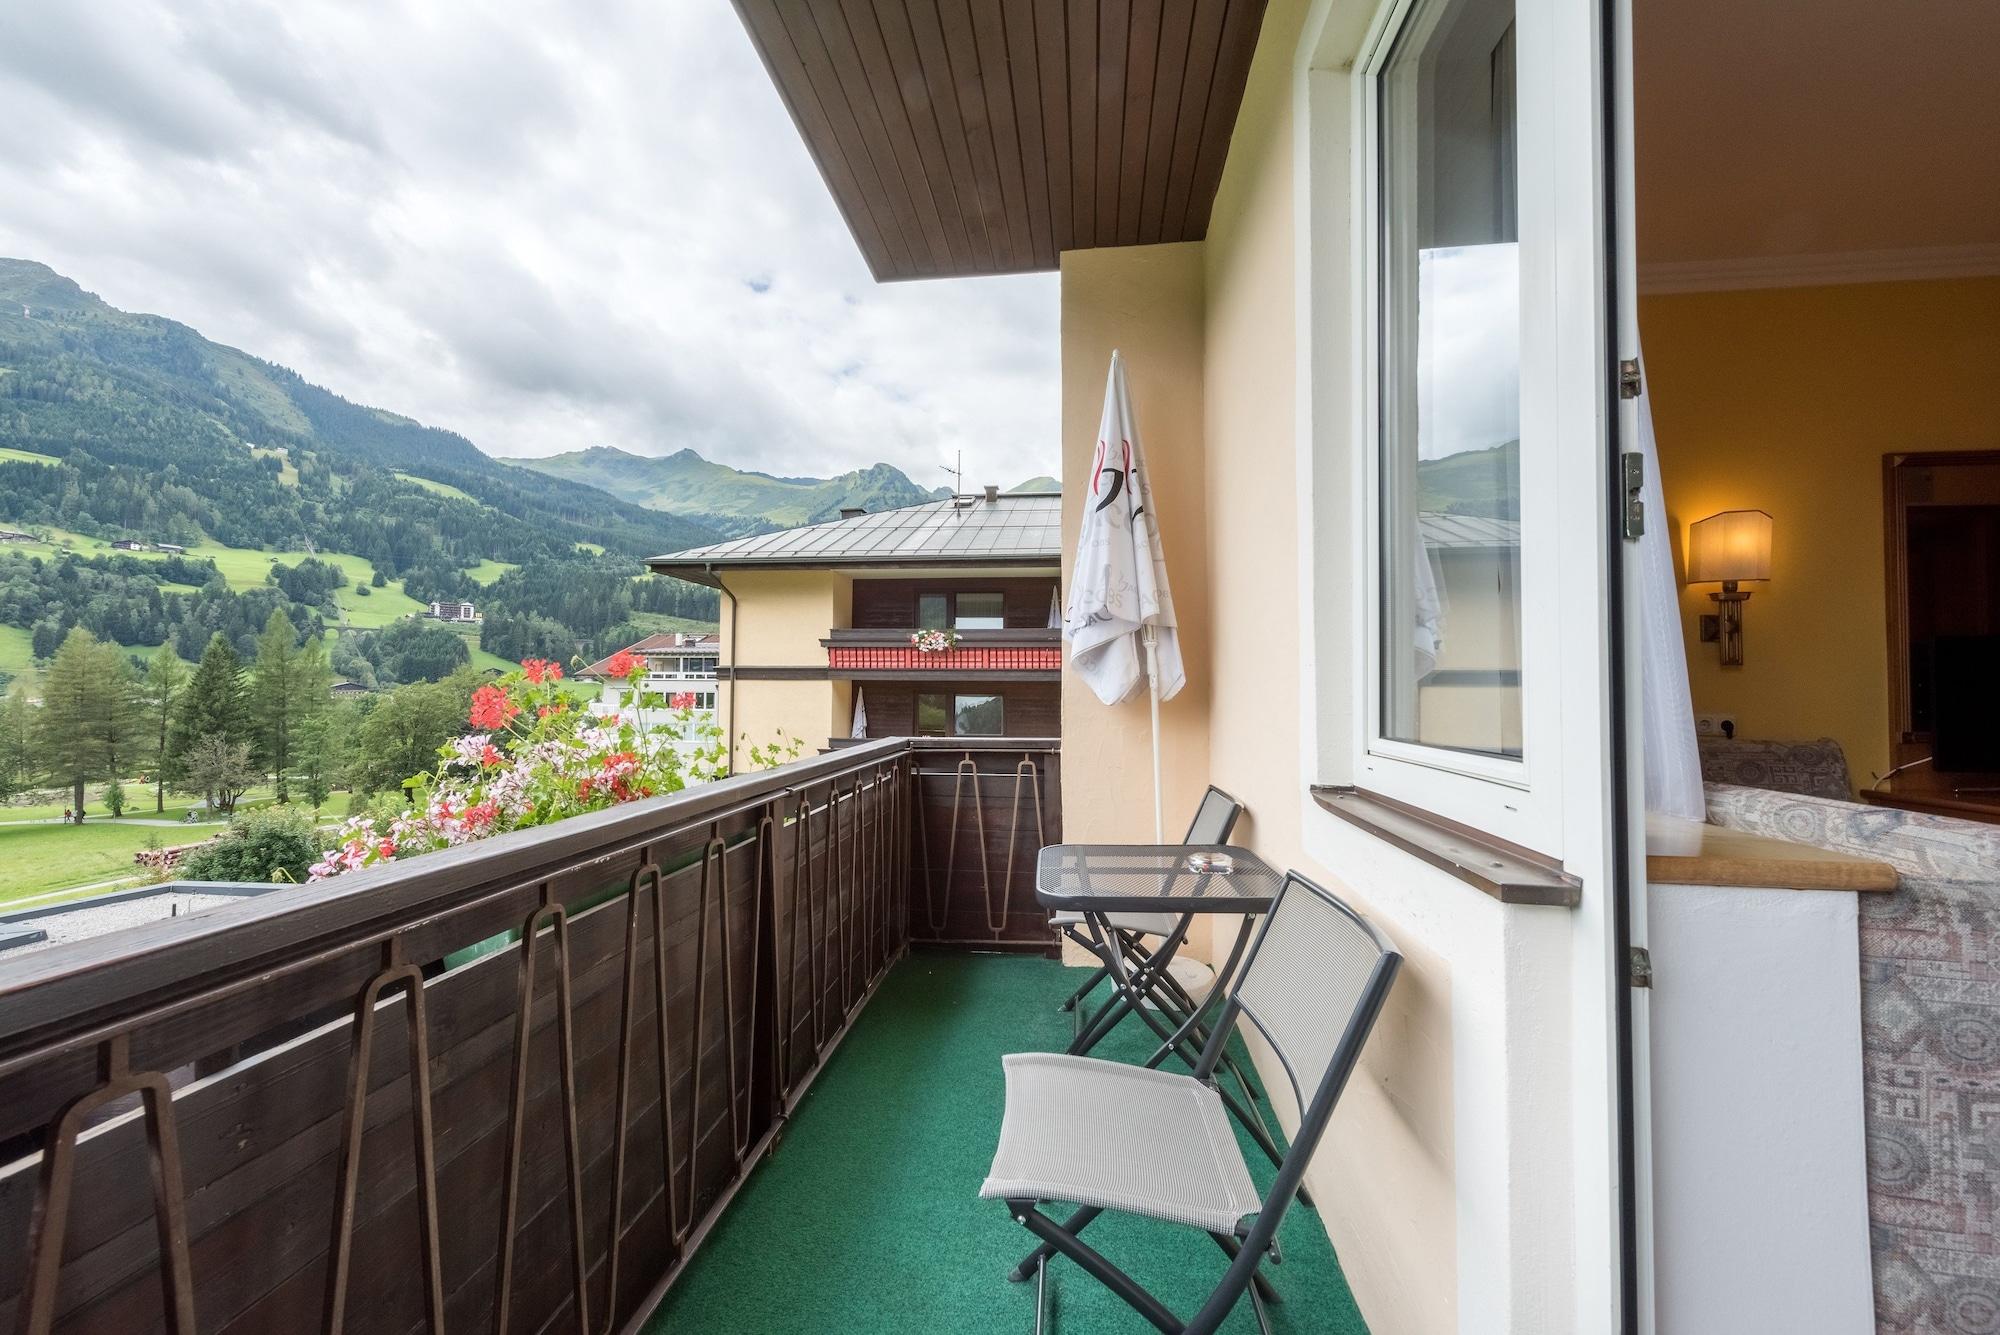 Hotel Germania Gastein - Ganzjahrig Inklusive Alpentherme Gastein & Sommersaison Inklusive Gasteiner Bergbahnen บาดฮอฟกัสไตน์ ภายนอก รูปภาพ